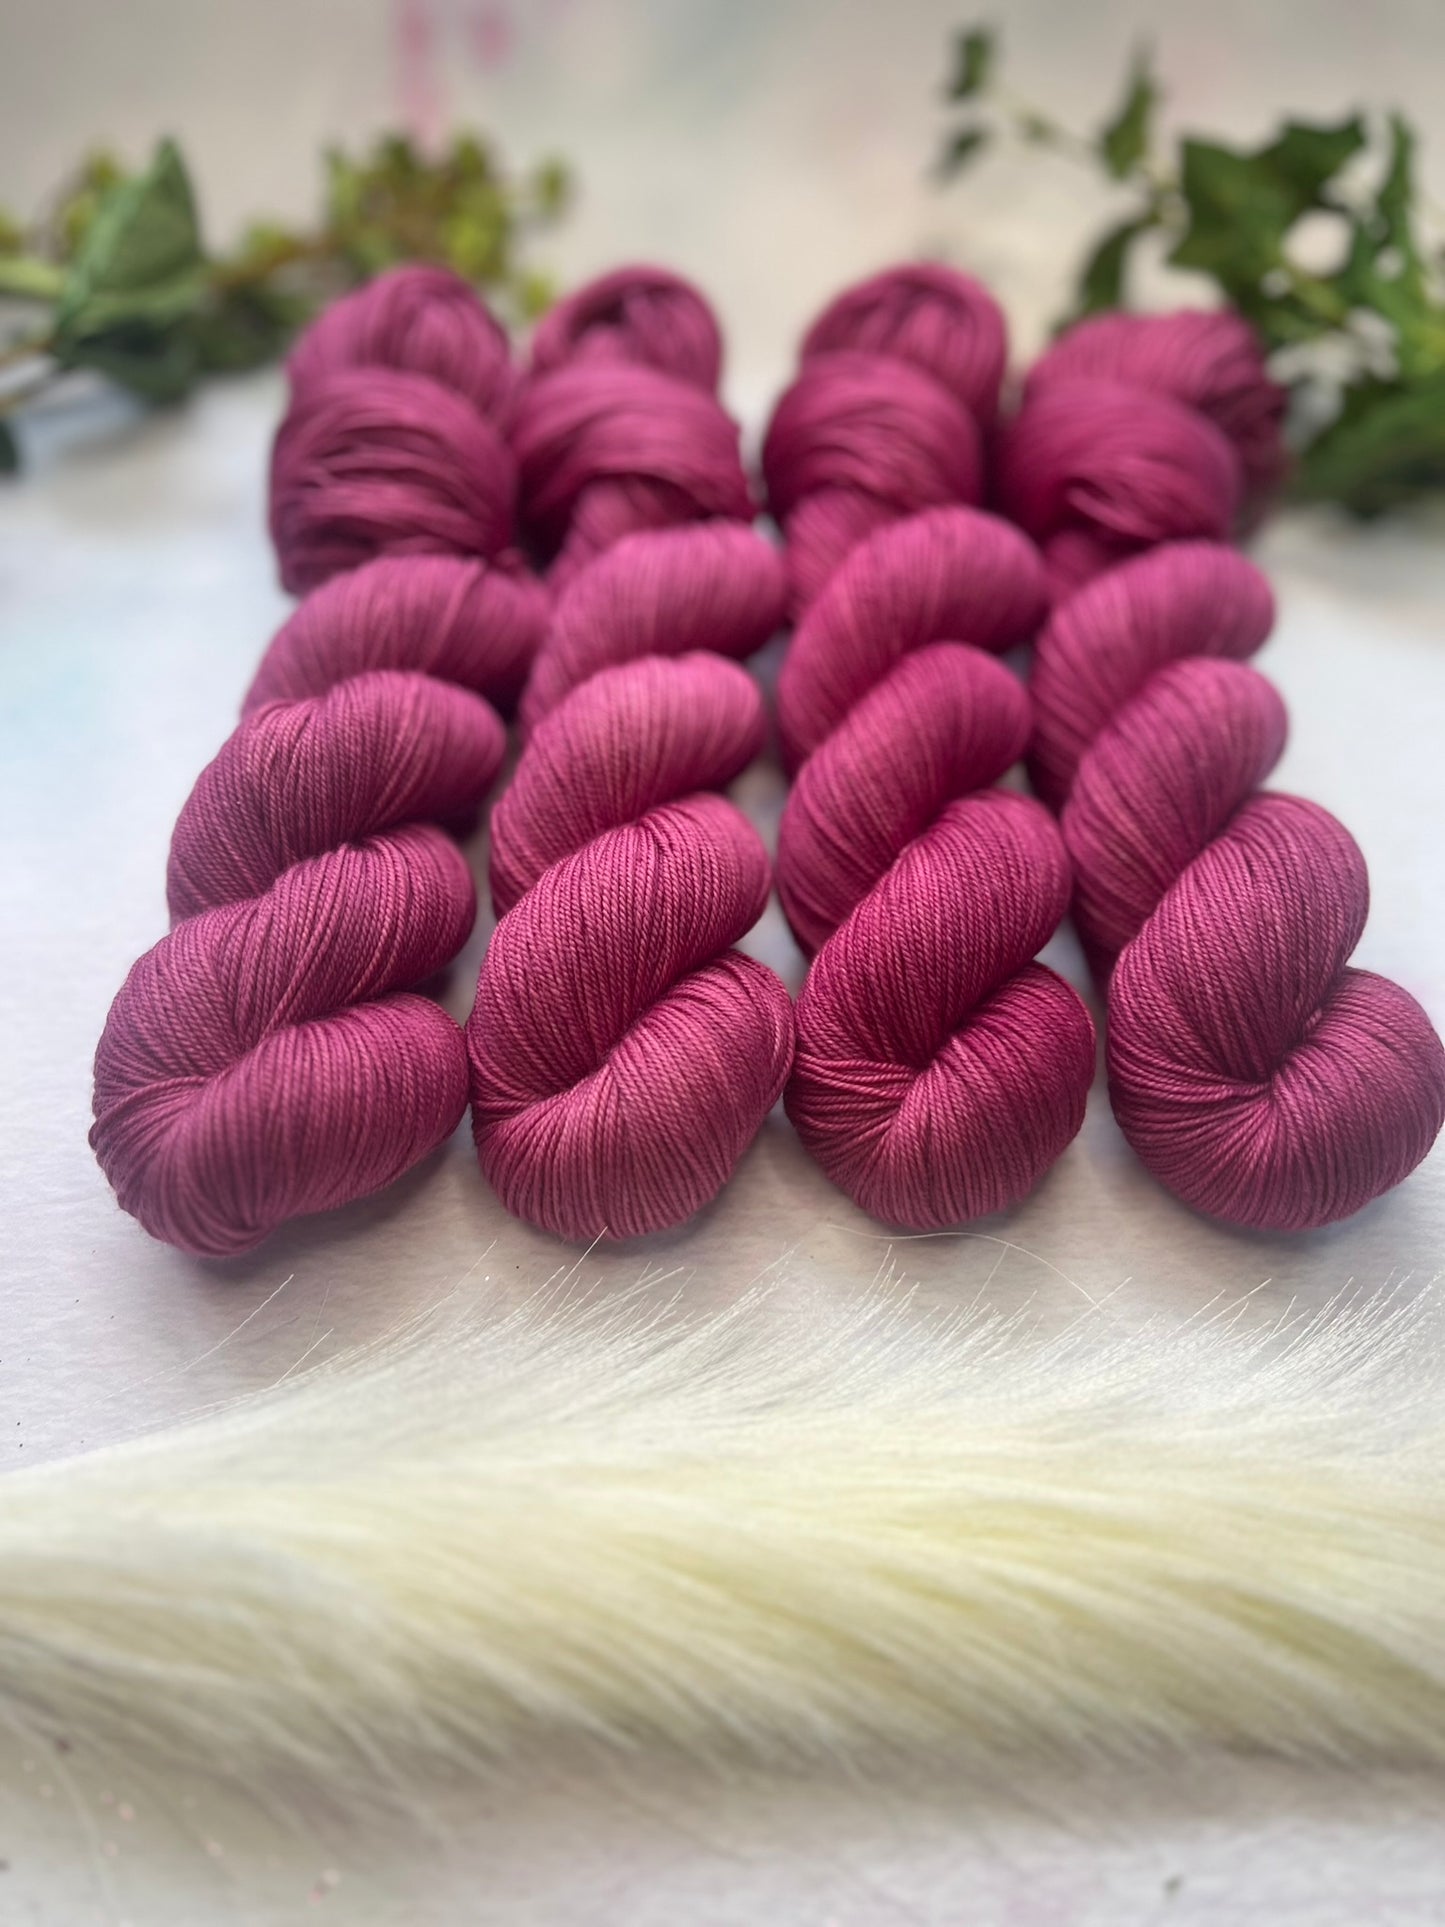 Raspberry Beret Tonal - Cosy 4Ply Hand Dyed Yarn - 100% Superwash Merino Cosy 4 Ply Yarn